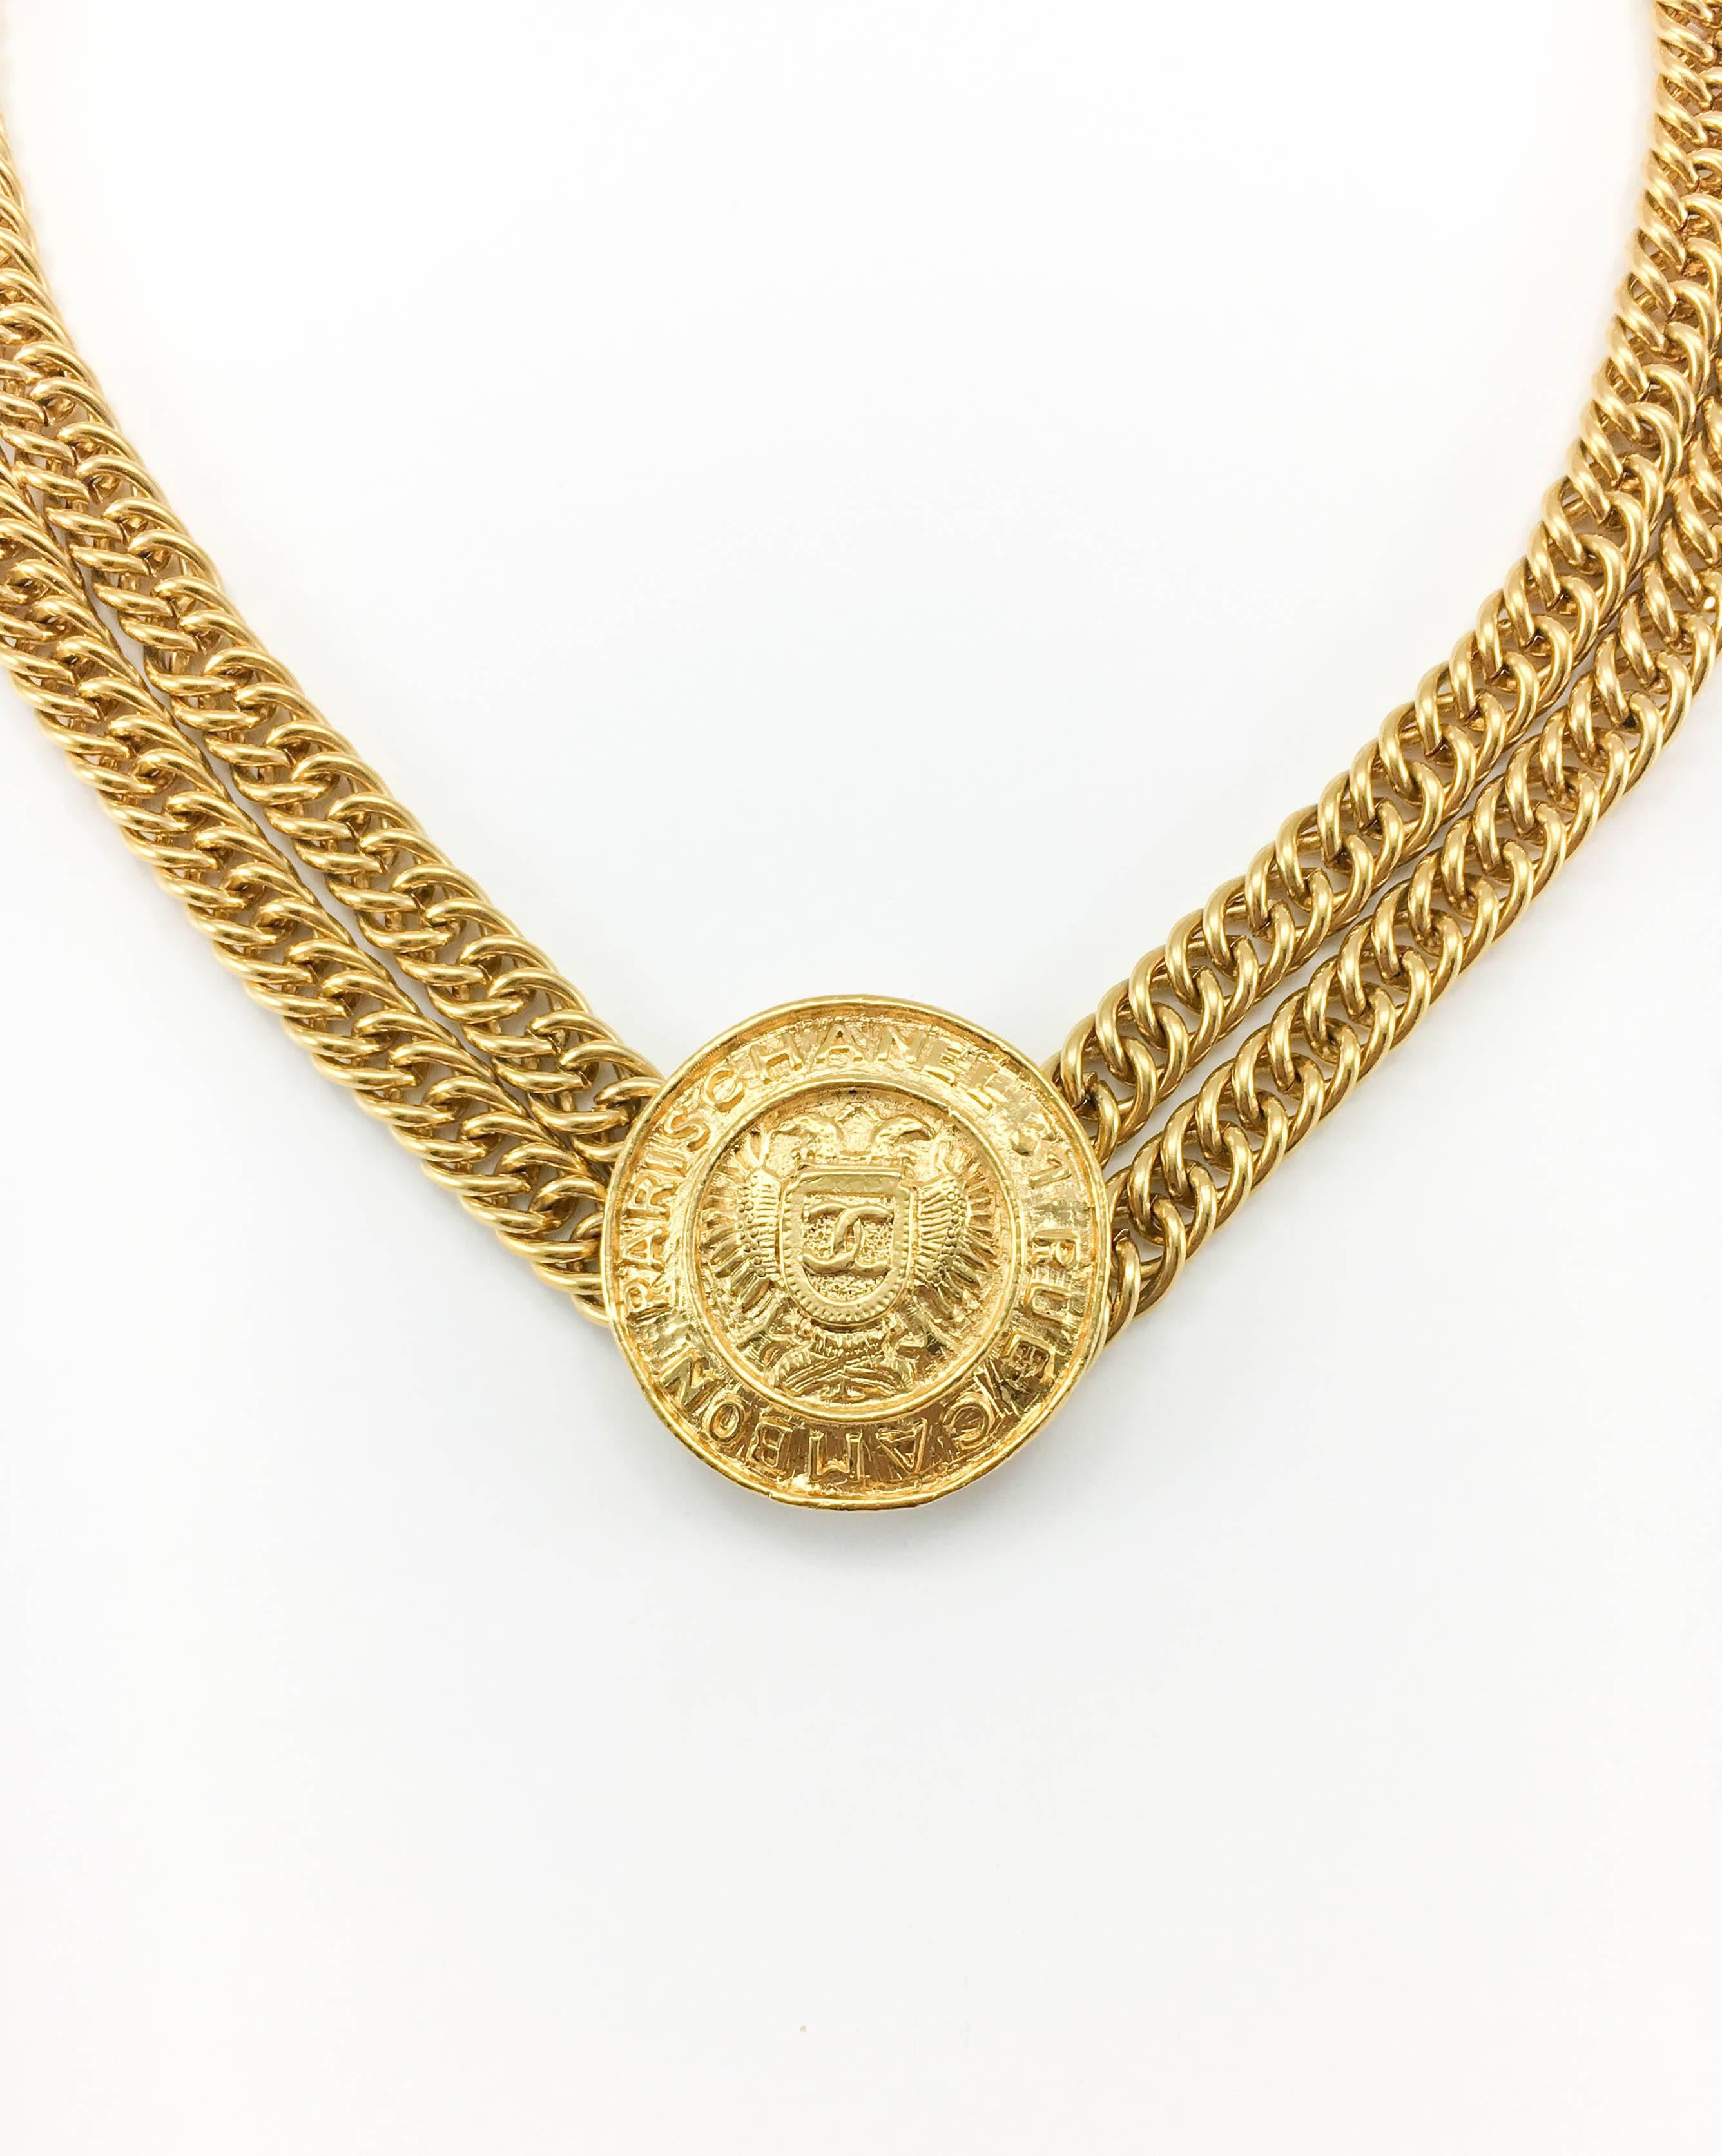 Chanel 'Rue Cambon' Medallion Necklace - Circa 1990 3